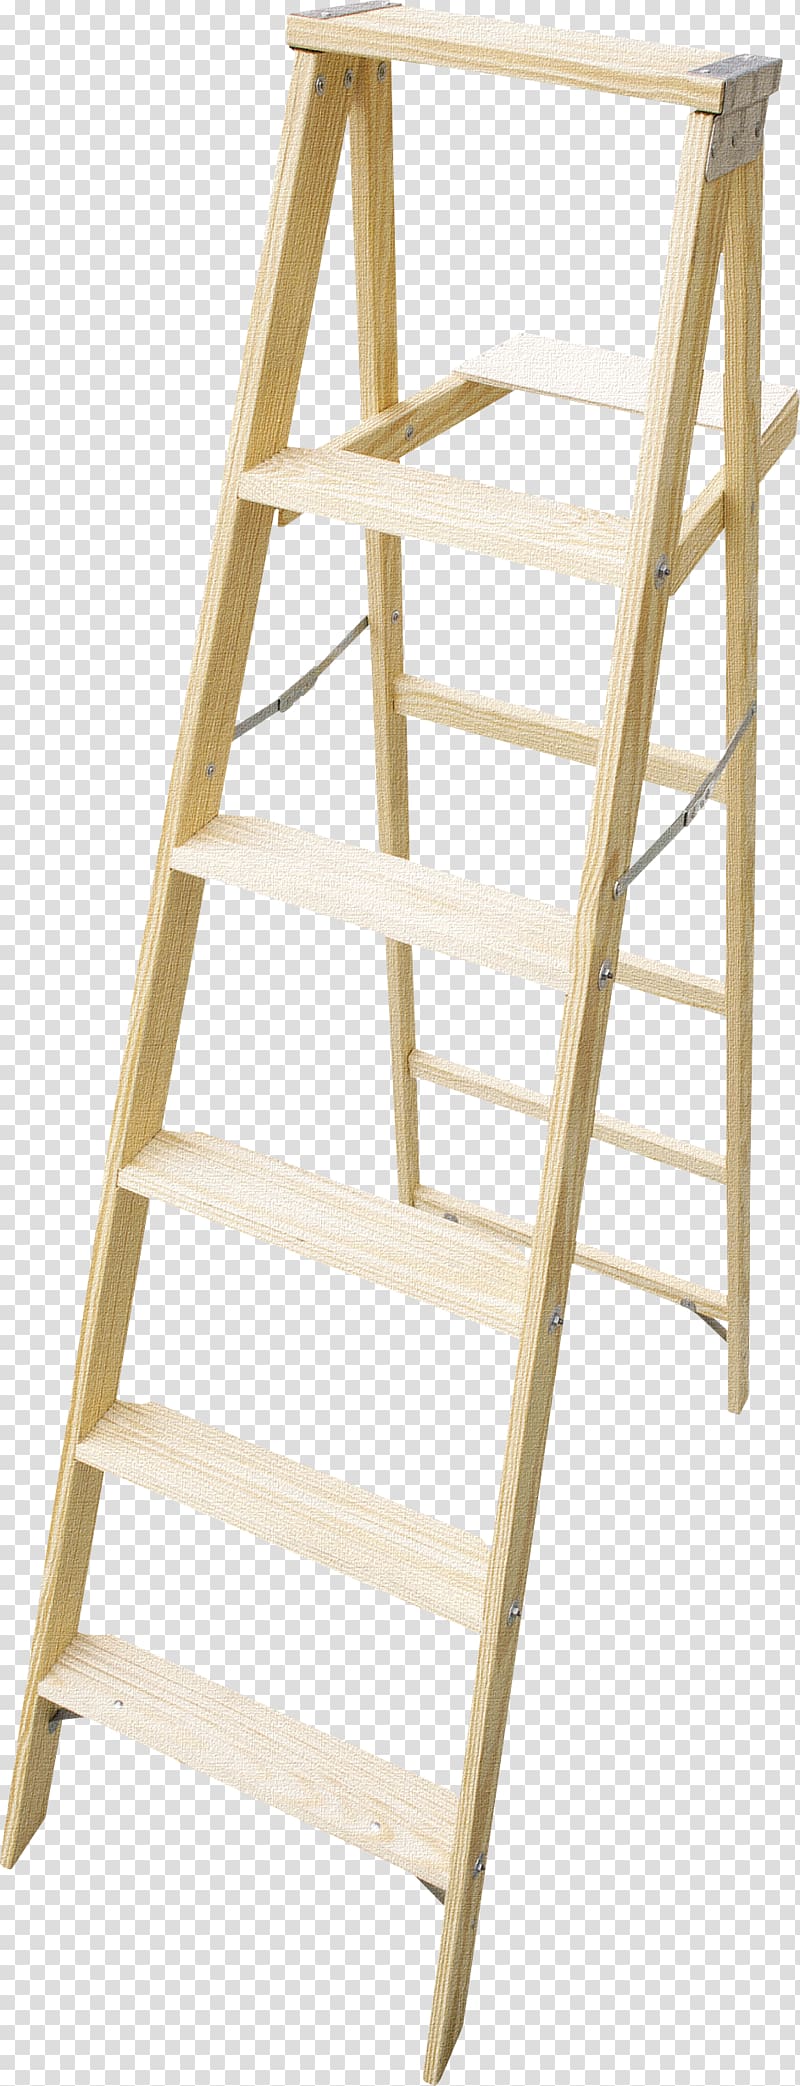 Ladder, Wooden ladder to climb a ladder transparent background PNG clipart